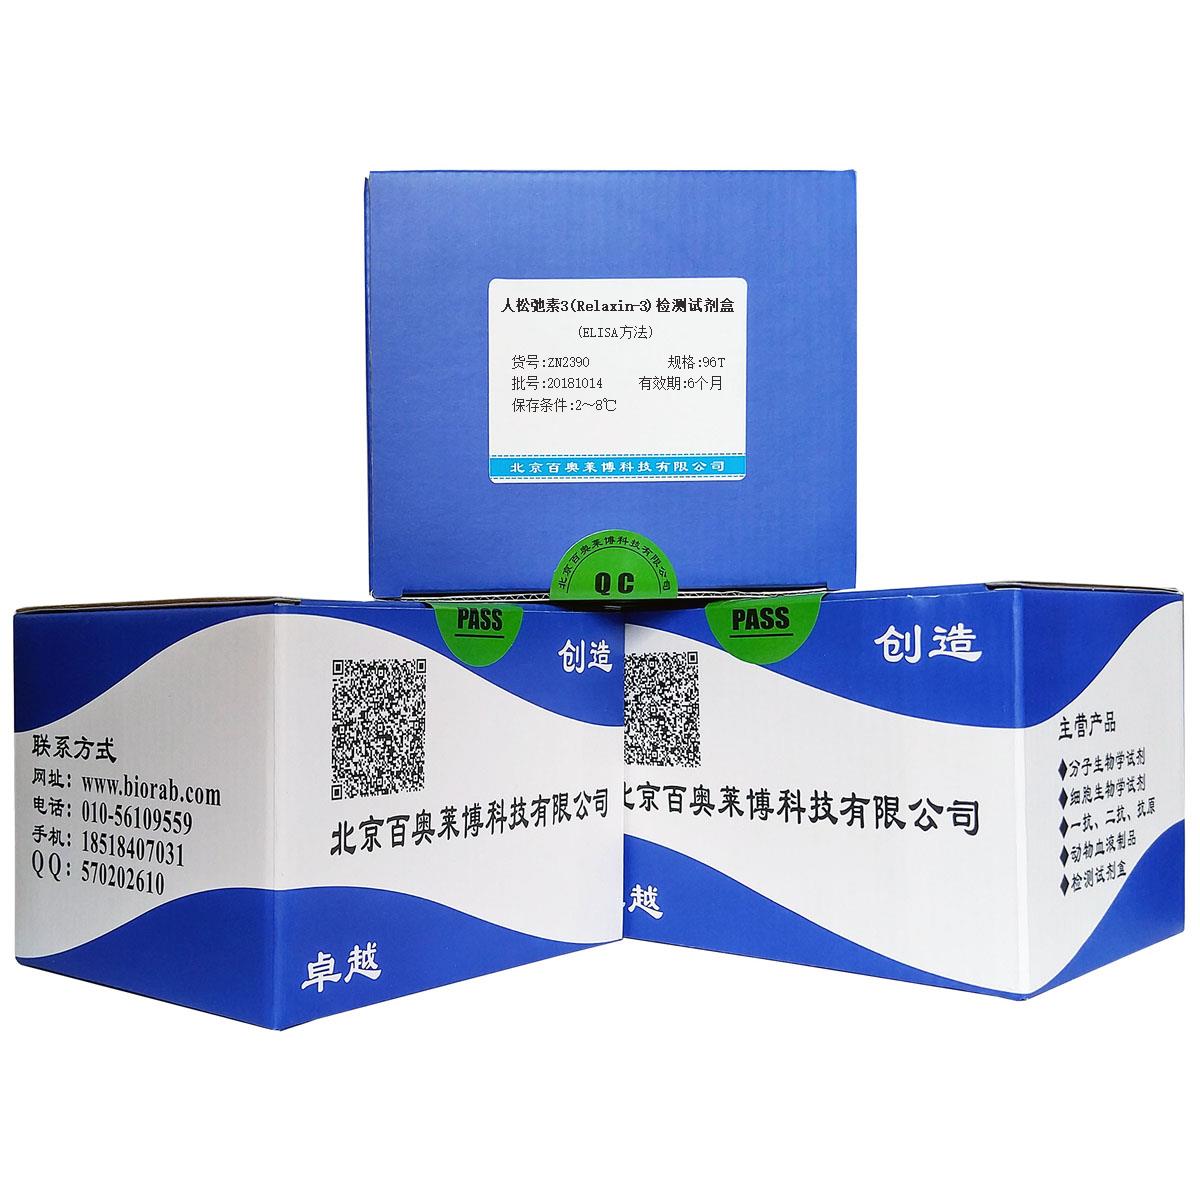 人松弛素3(Relaxin-3)检测试剂盒(ELISA方法)